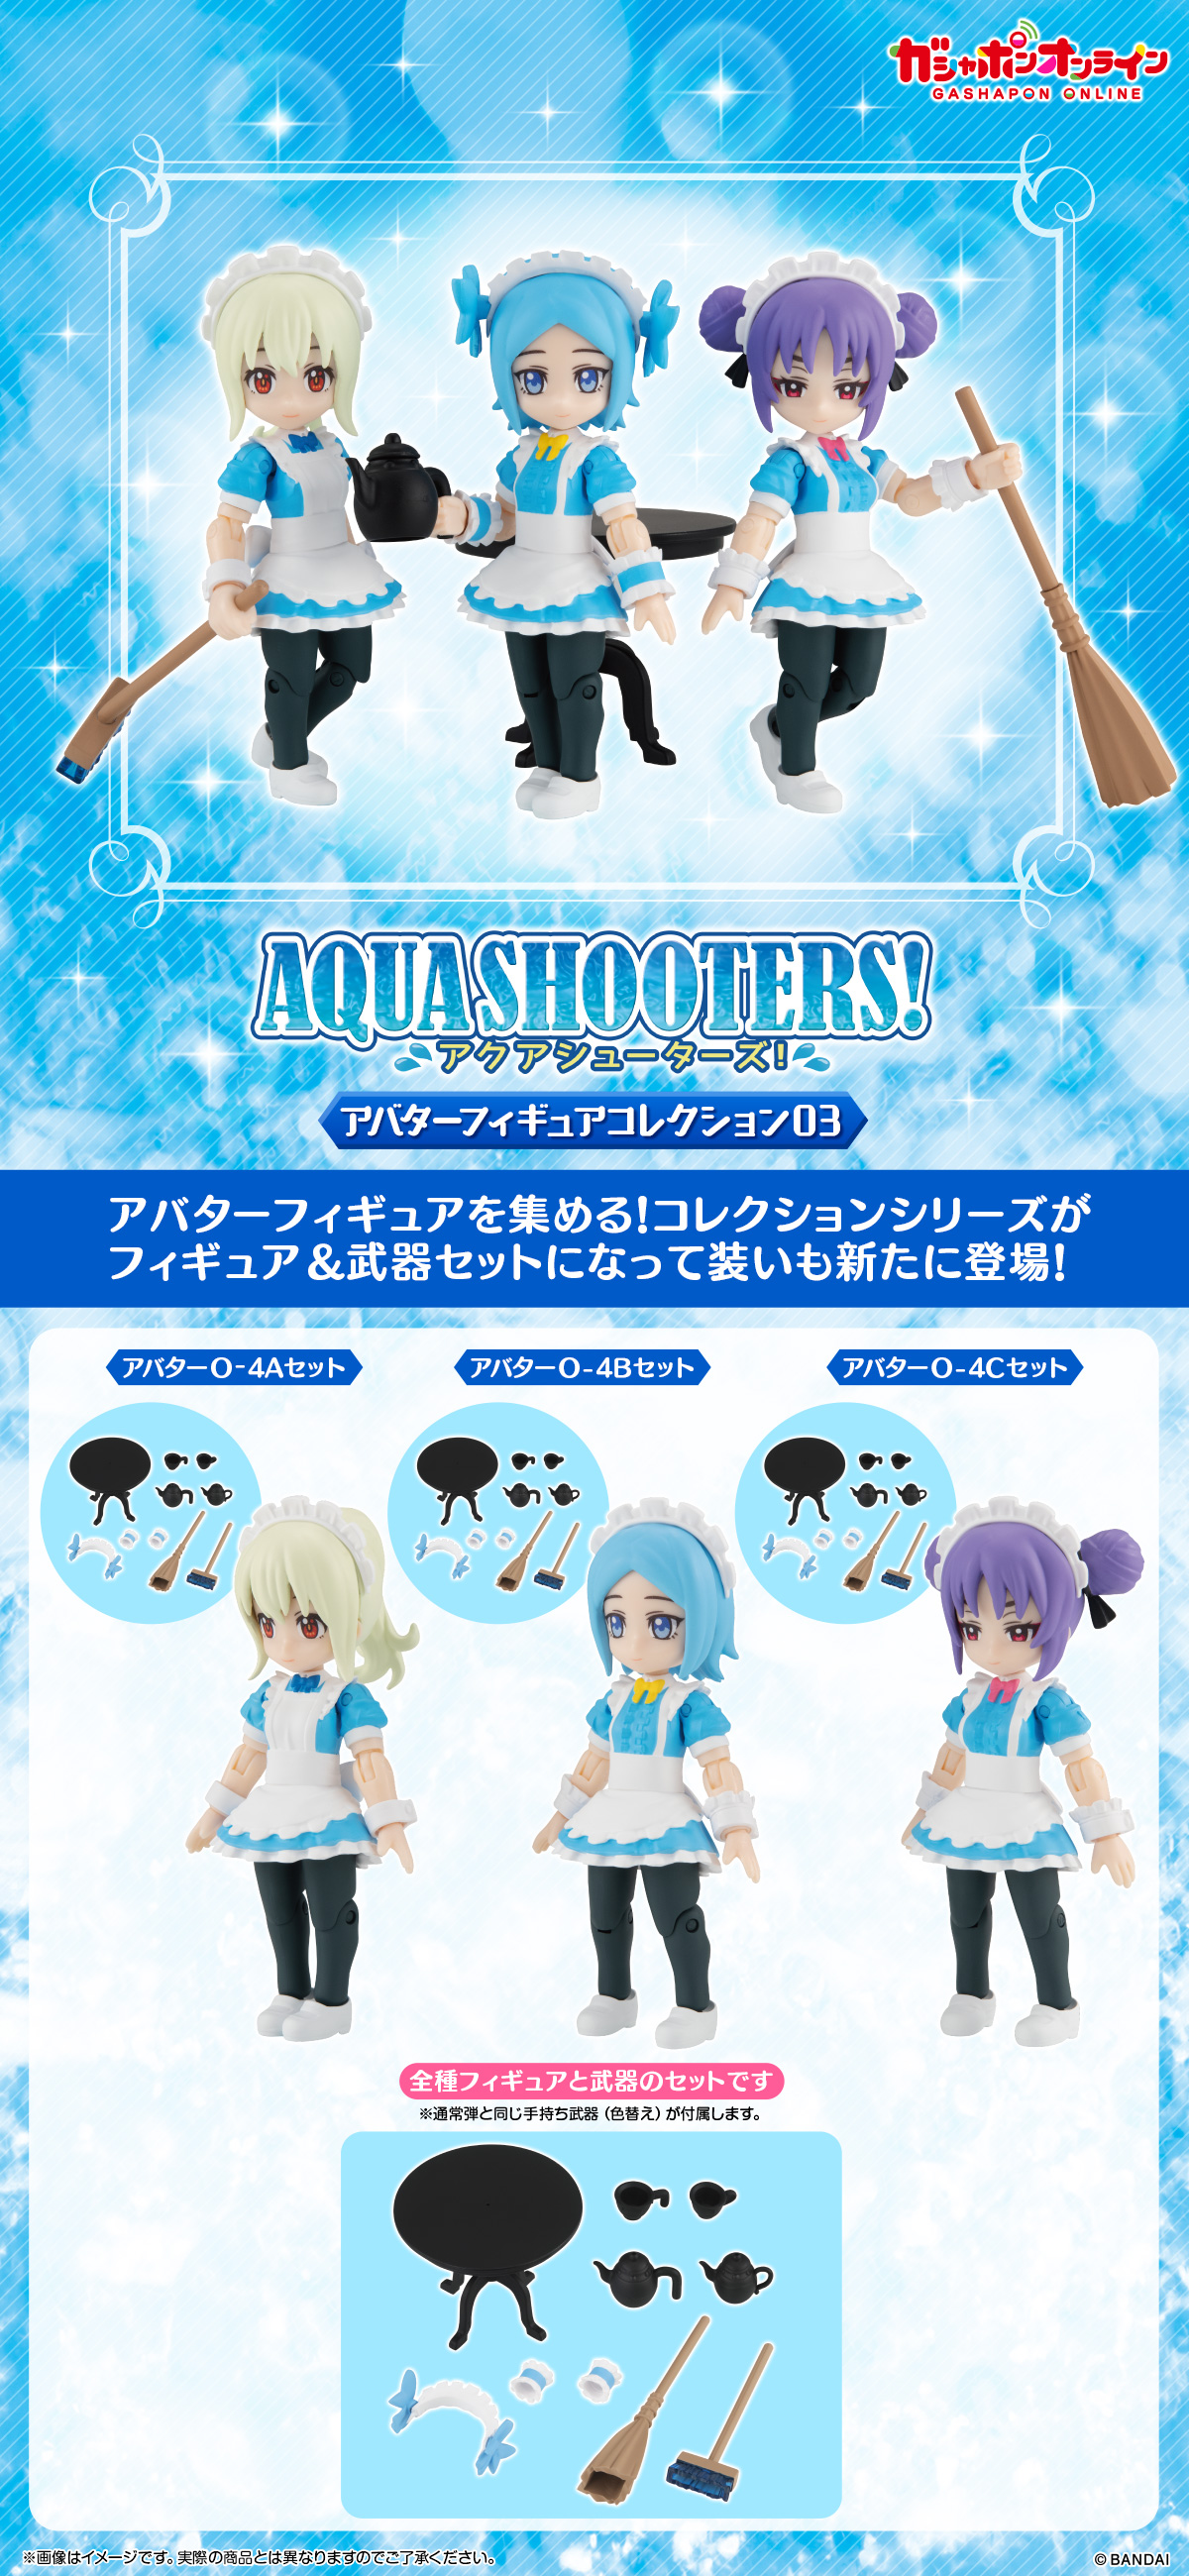 AQUA SHOOTERS! アバターフィギュアコレクション03 | ナムコパークス